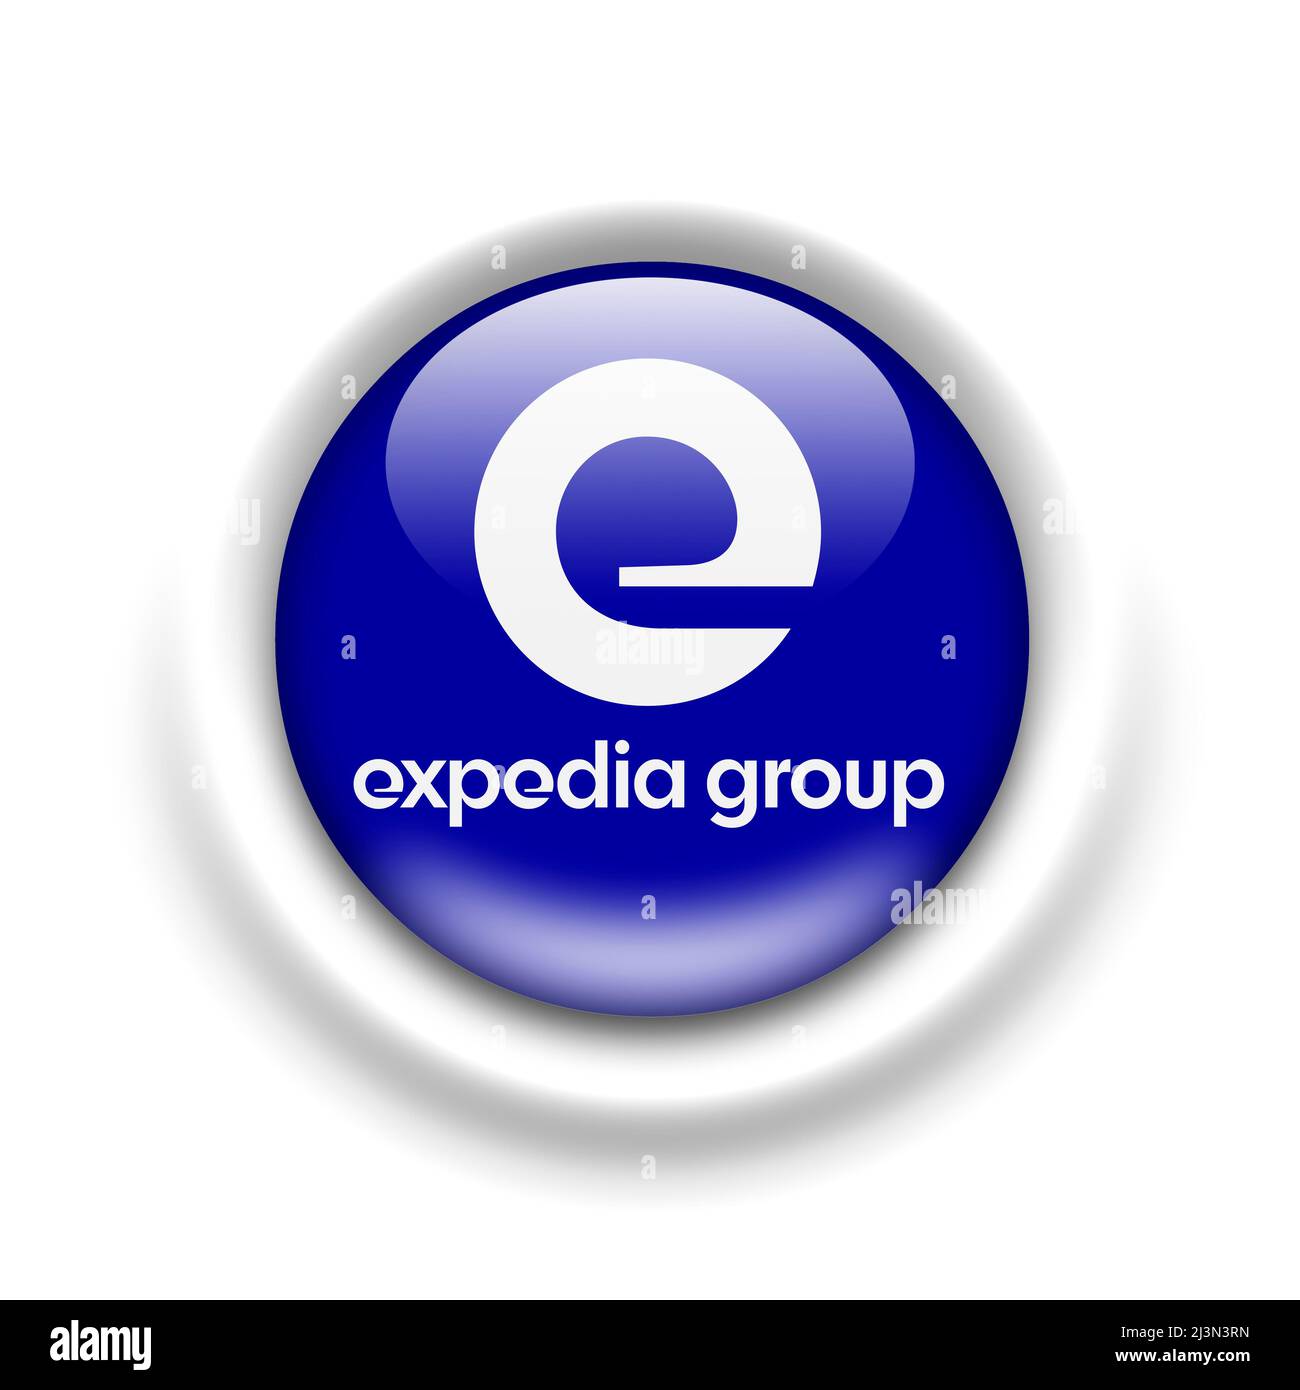 Expedia group logo Stock Photo